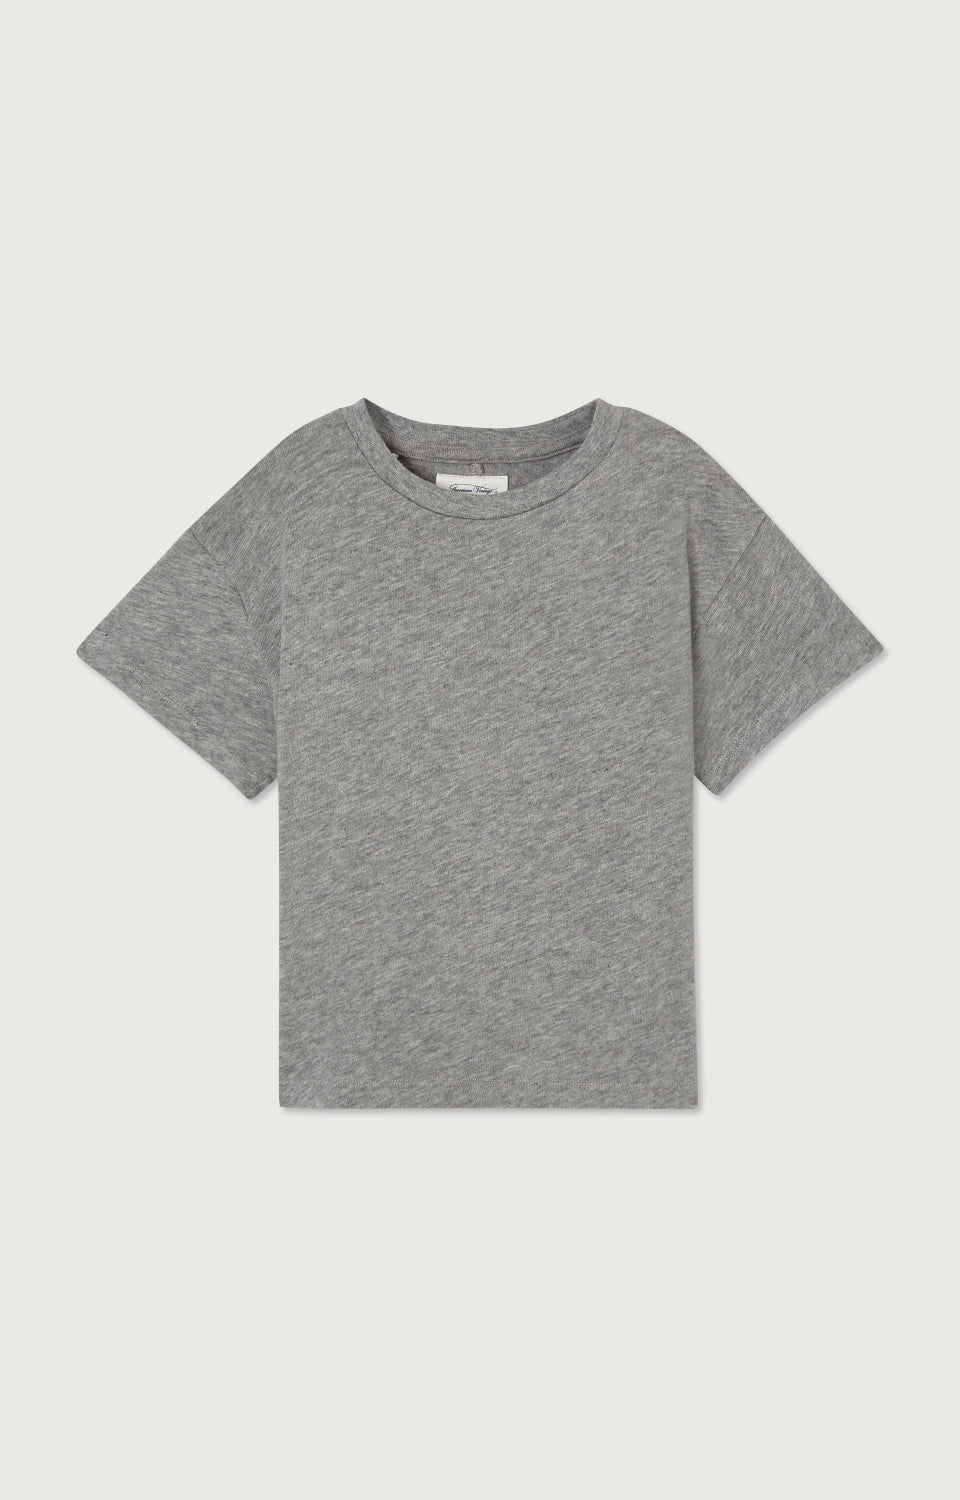 American Vintage / T-Shirt / Sonoma / Heather Grey